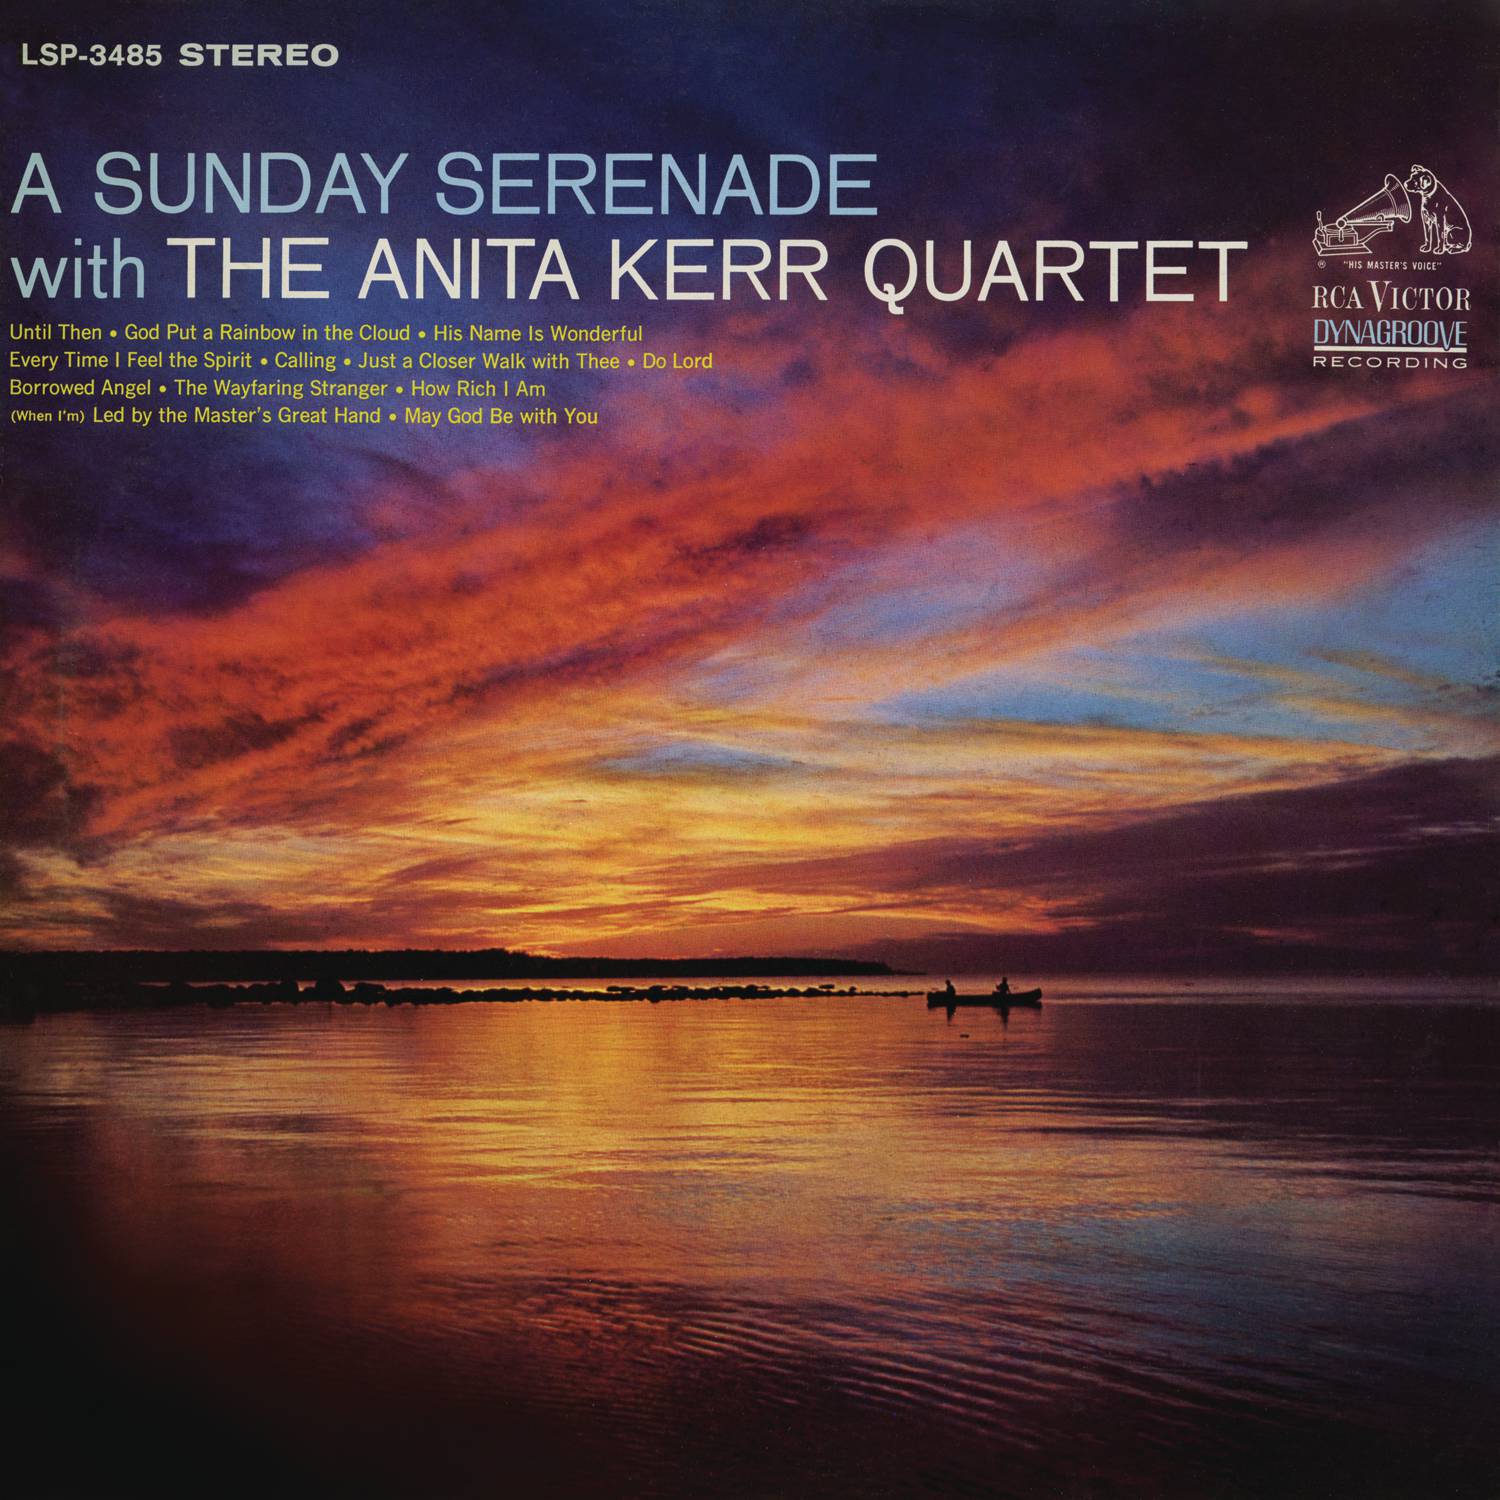 Anita Kerr Quartet - A Sunday Serenade (1966/2015) [AcousticSounds FLAC 24bit/96kHz]